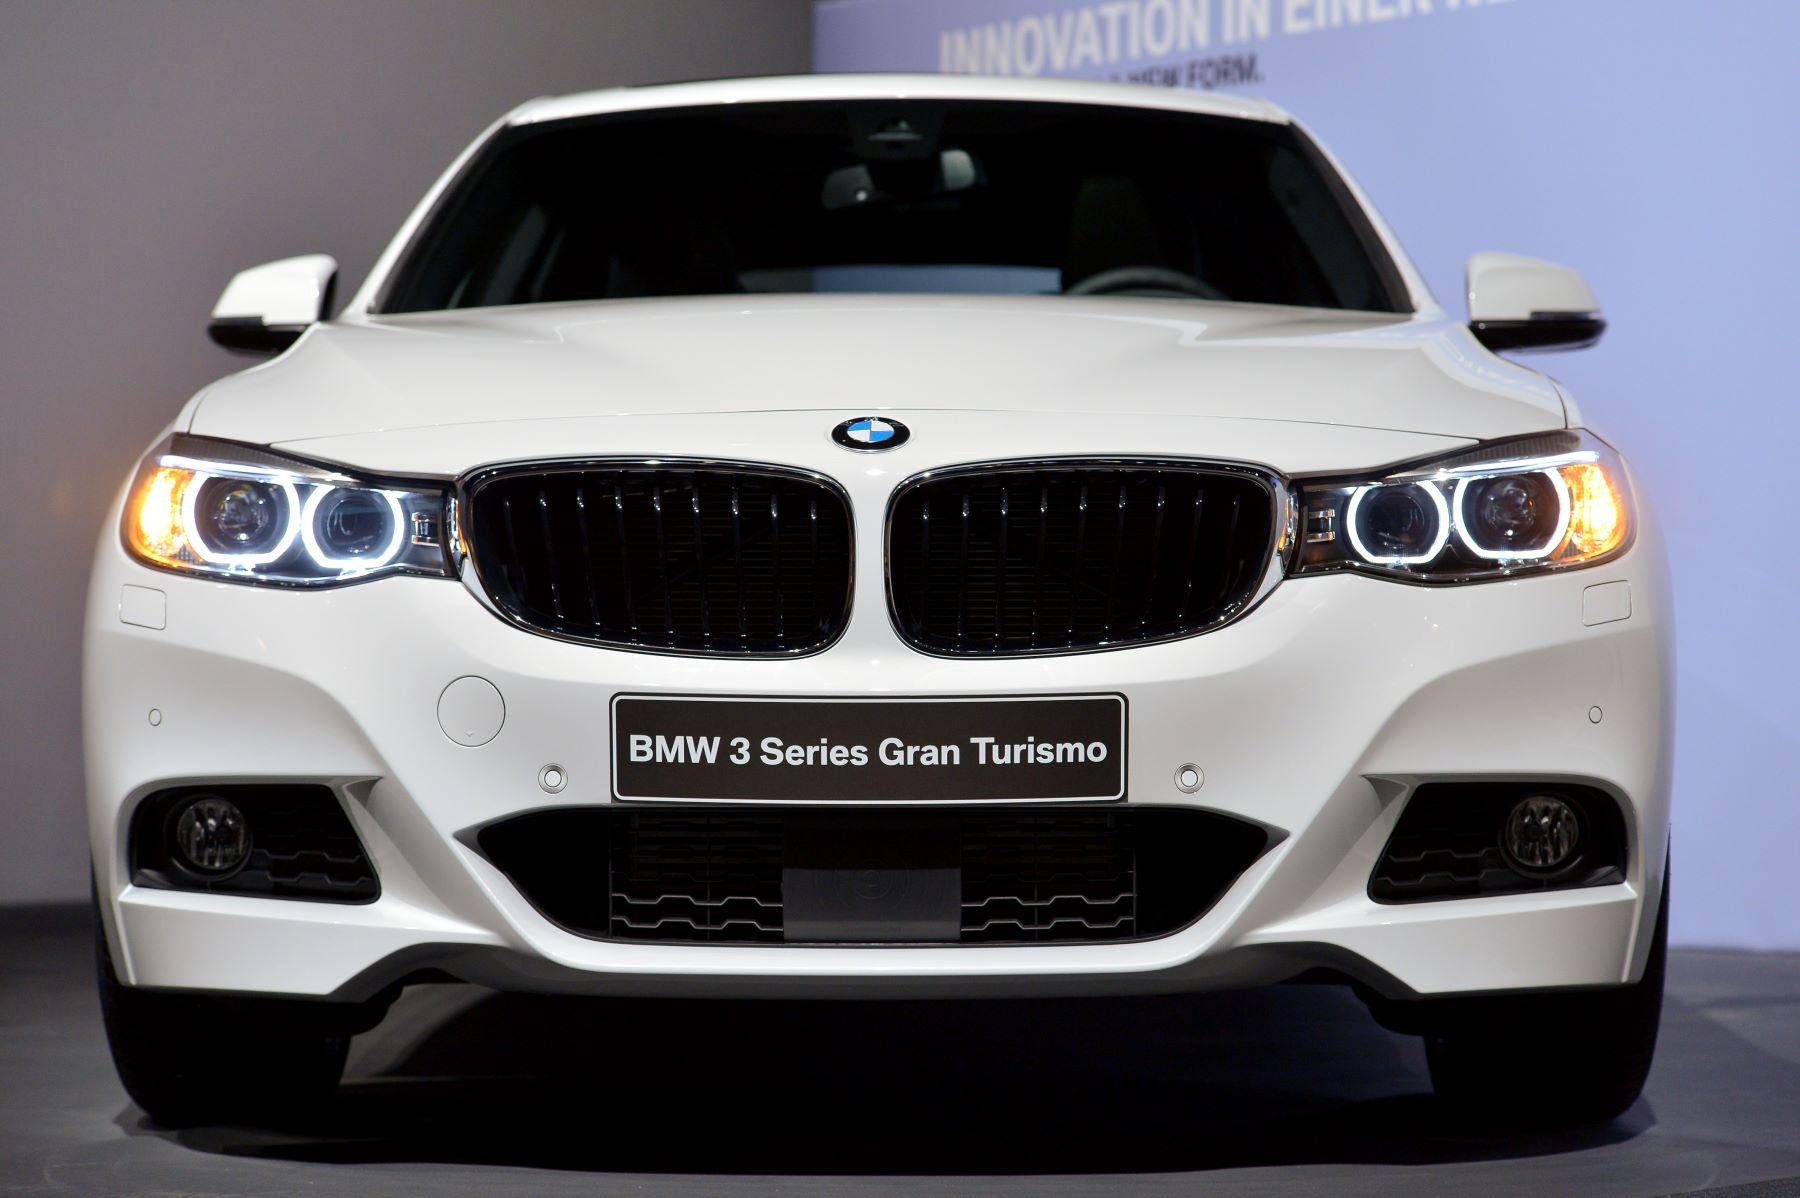 A 2013 presentation of the BMW 3 Series Gran Turismo luxury sports car model